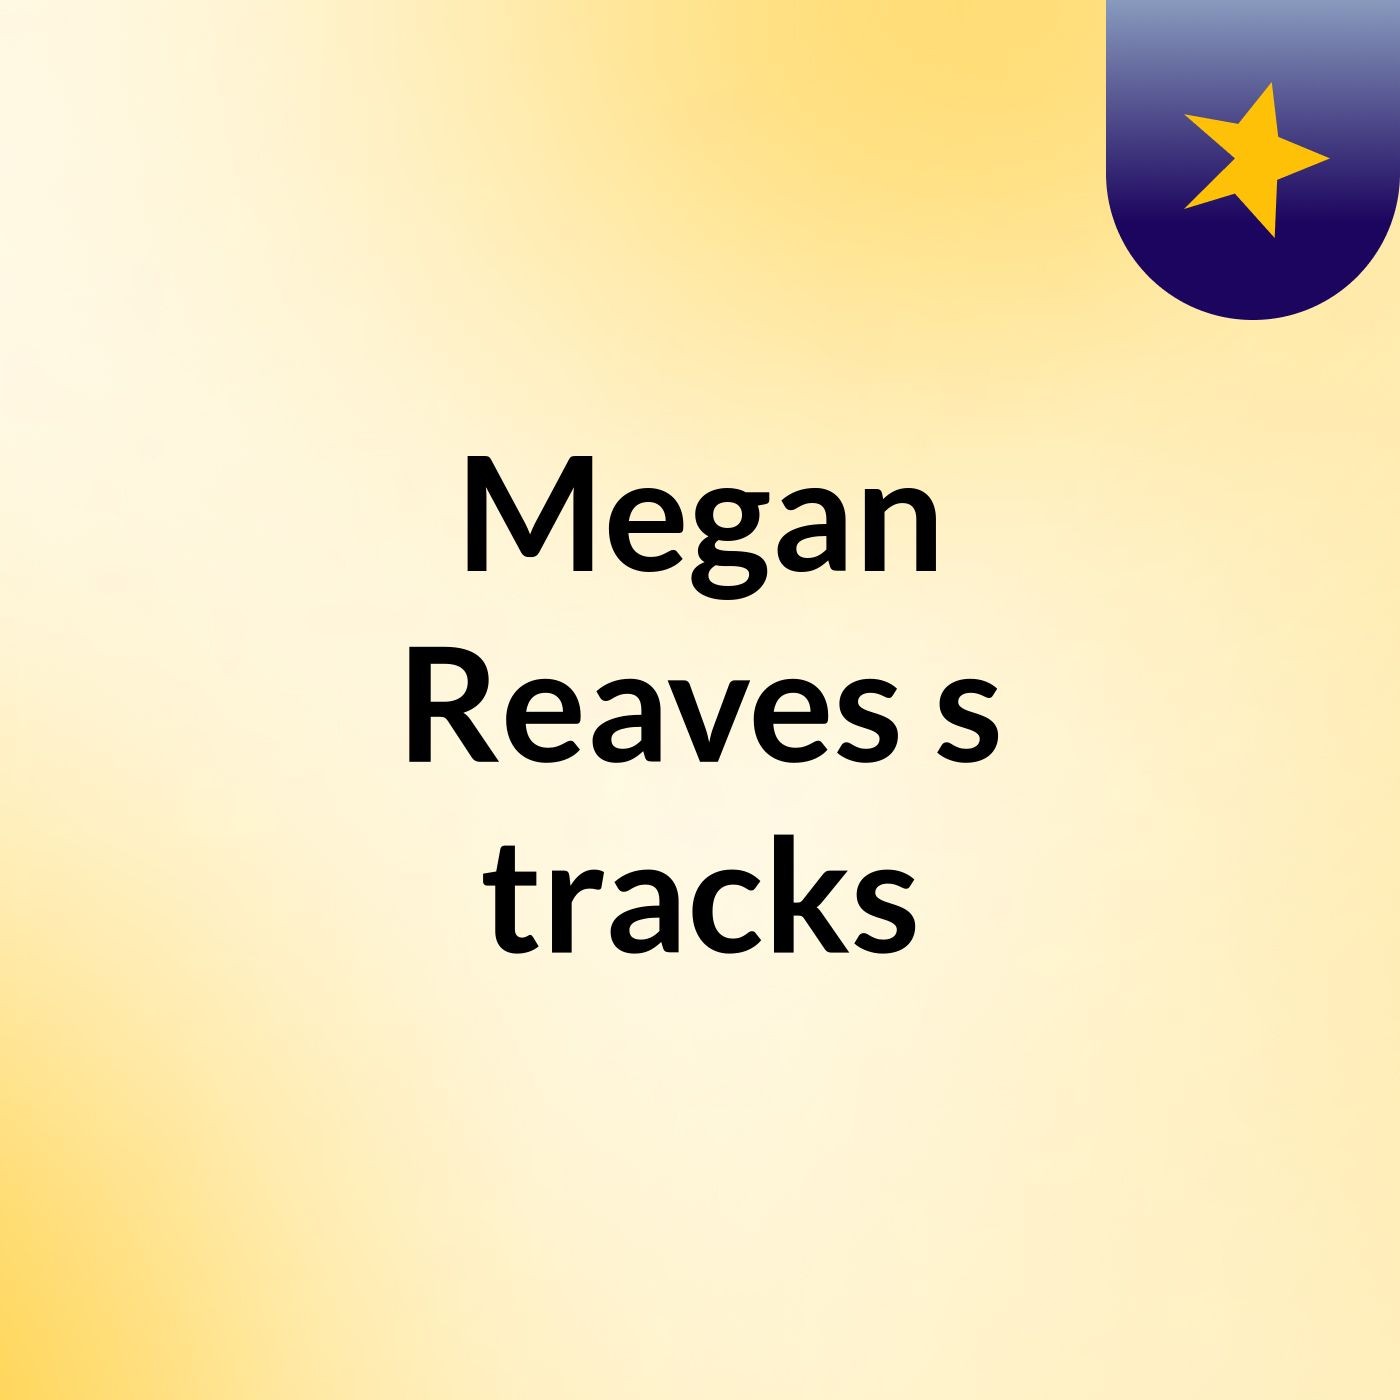 Megan Reaves's tracks